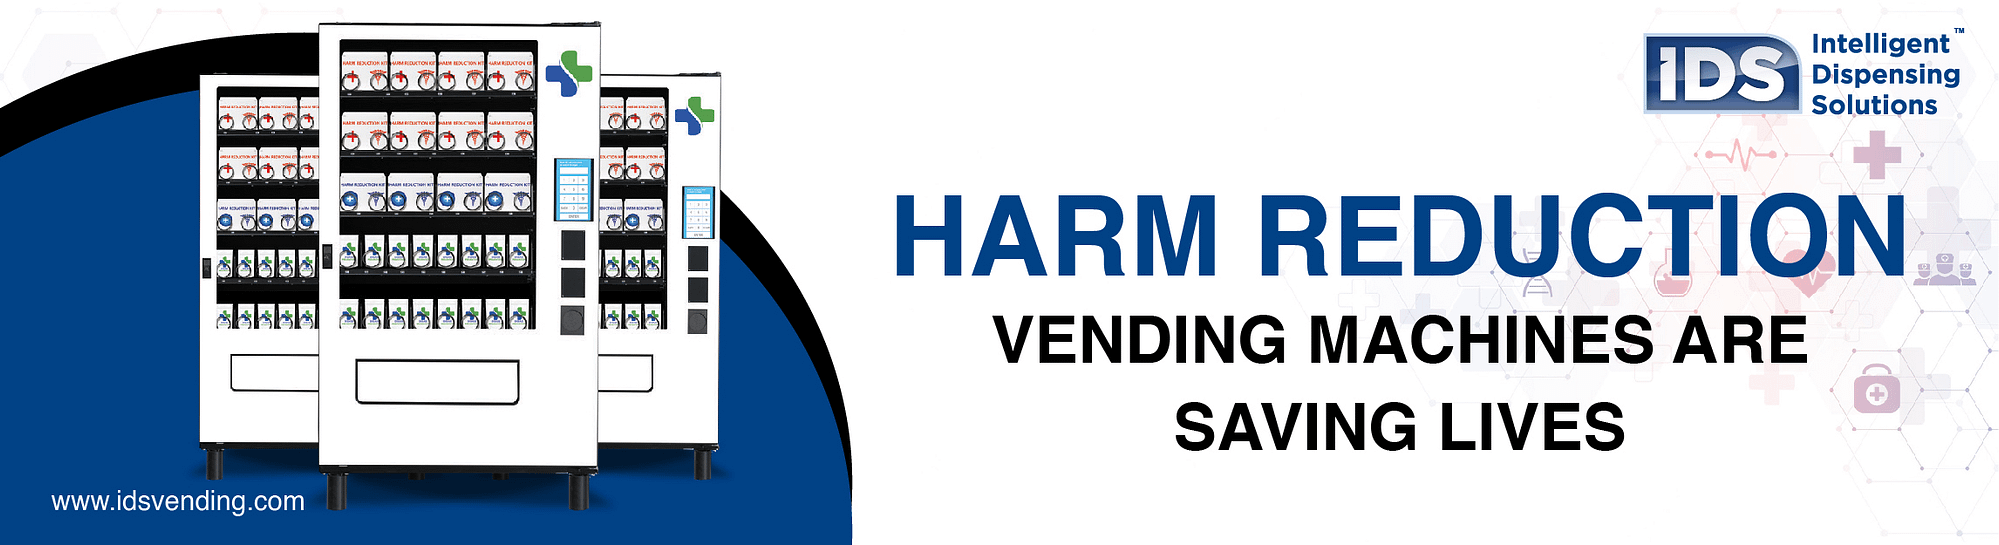 Harm reduction vending machines